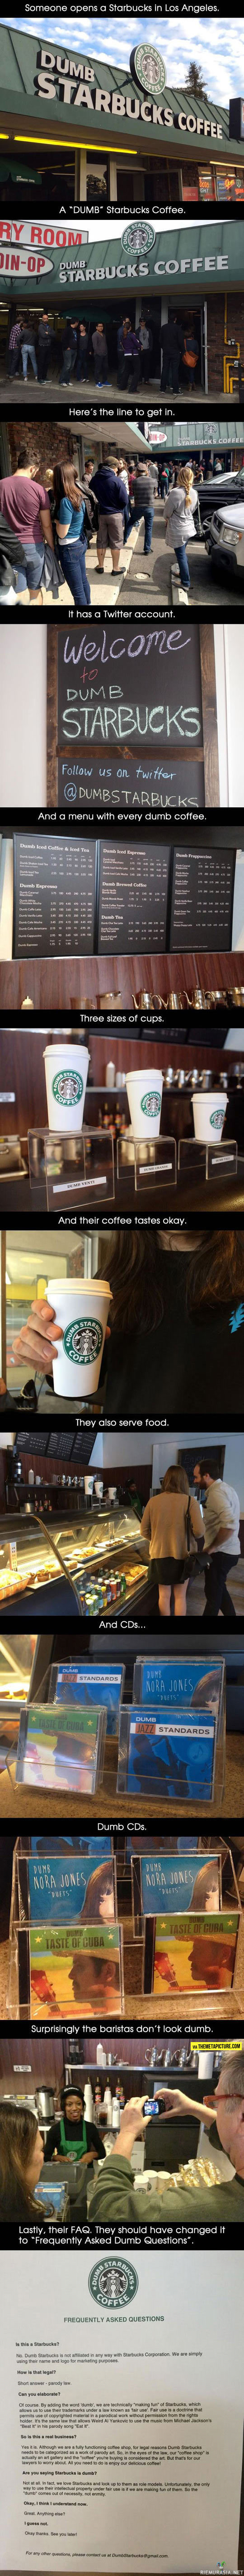 Dumb Starbucks